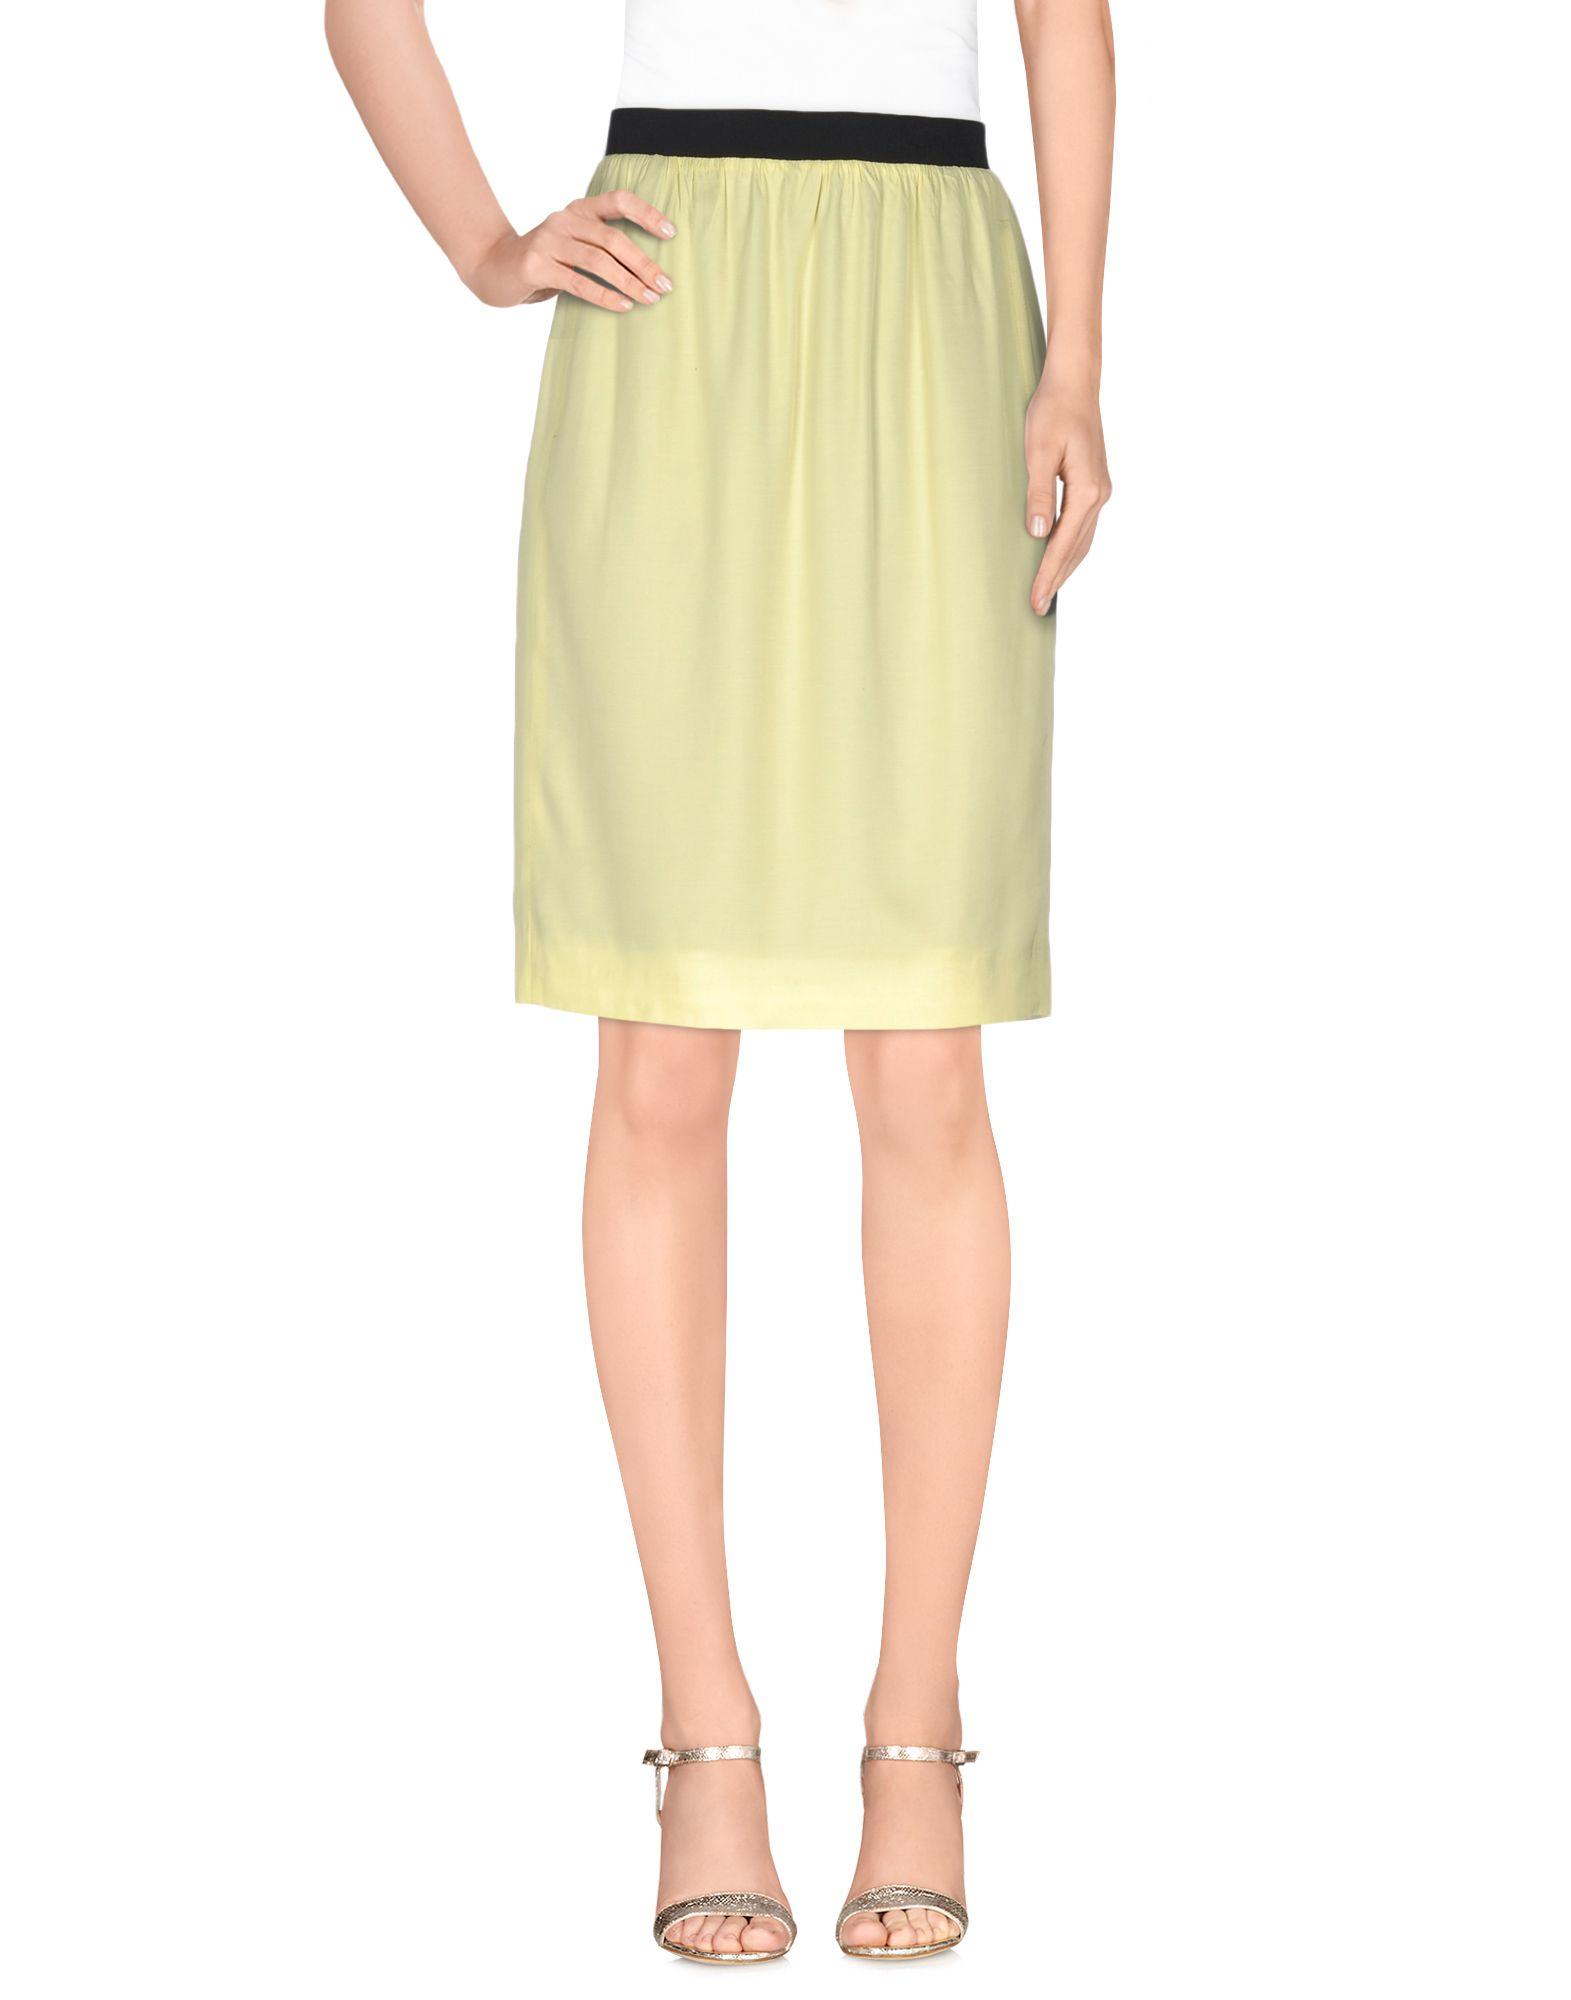 Golden Goose Deluxe Brand Knee Length Skirt in Yellow - Lyst